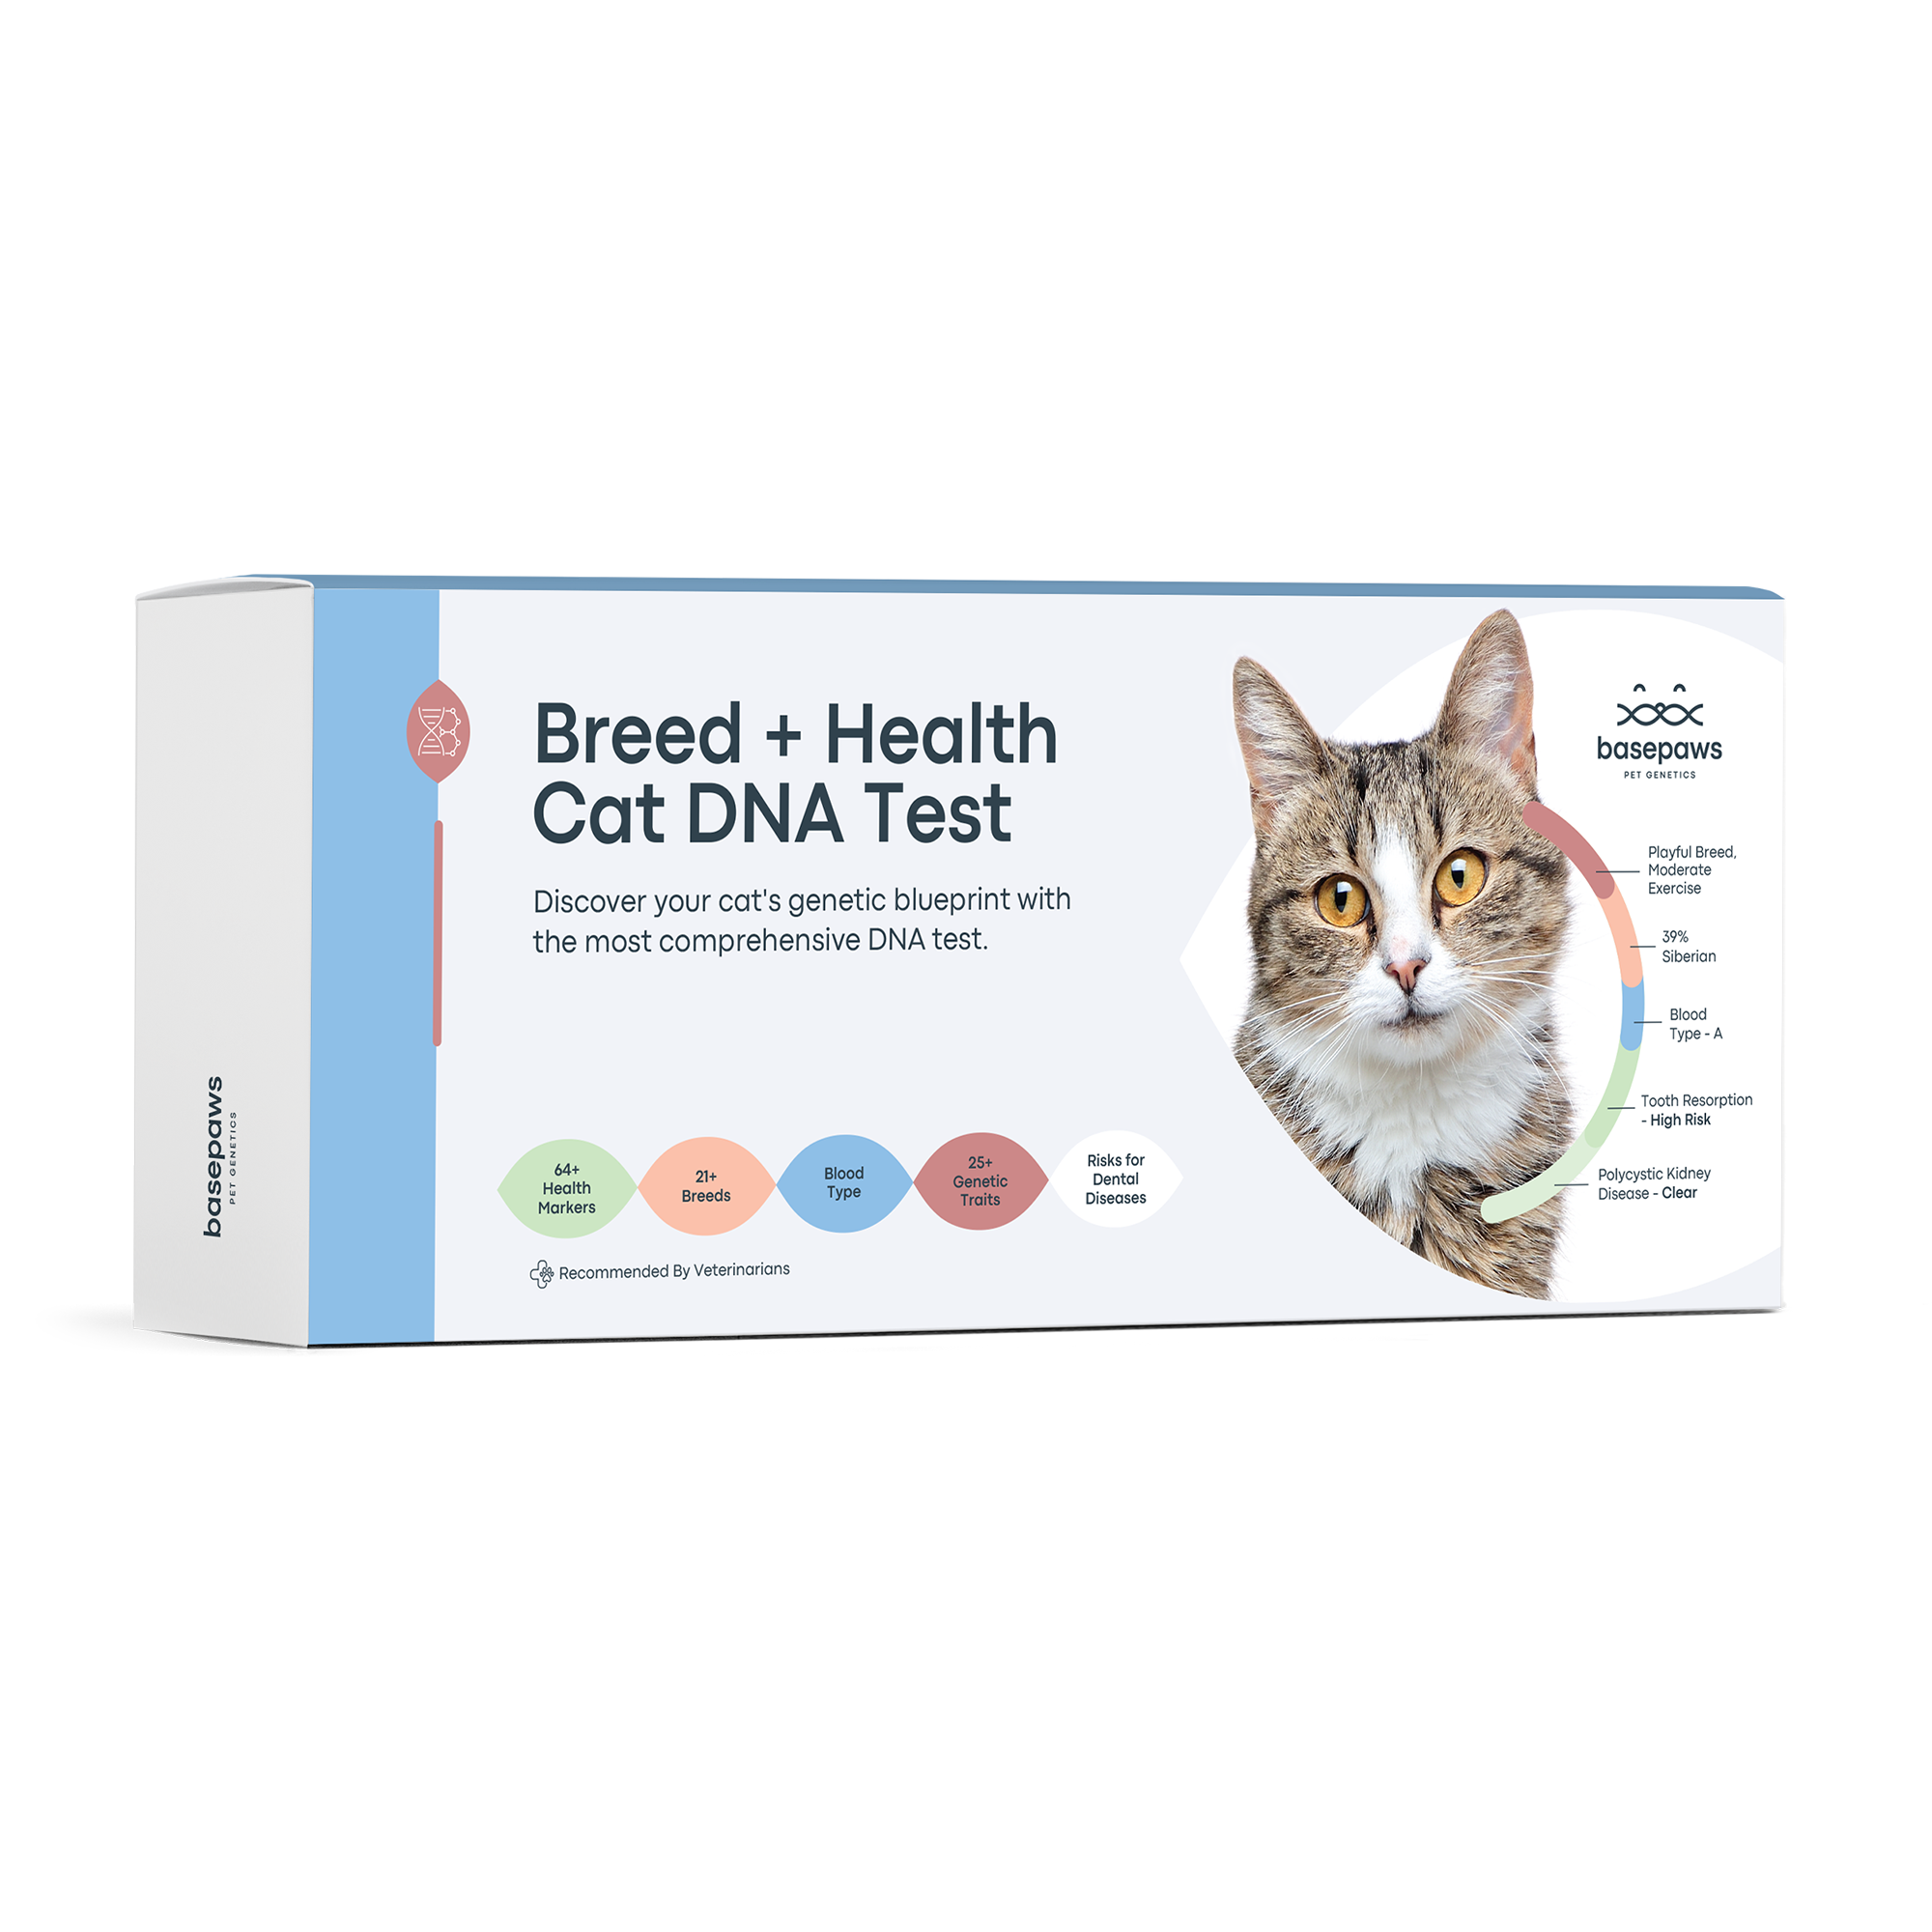 Breed + Health Cat DNA Test Box